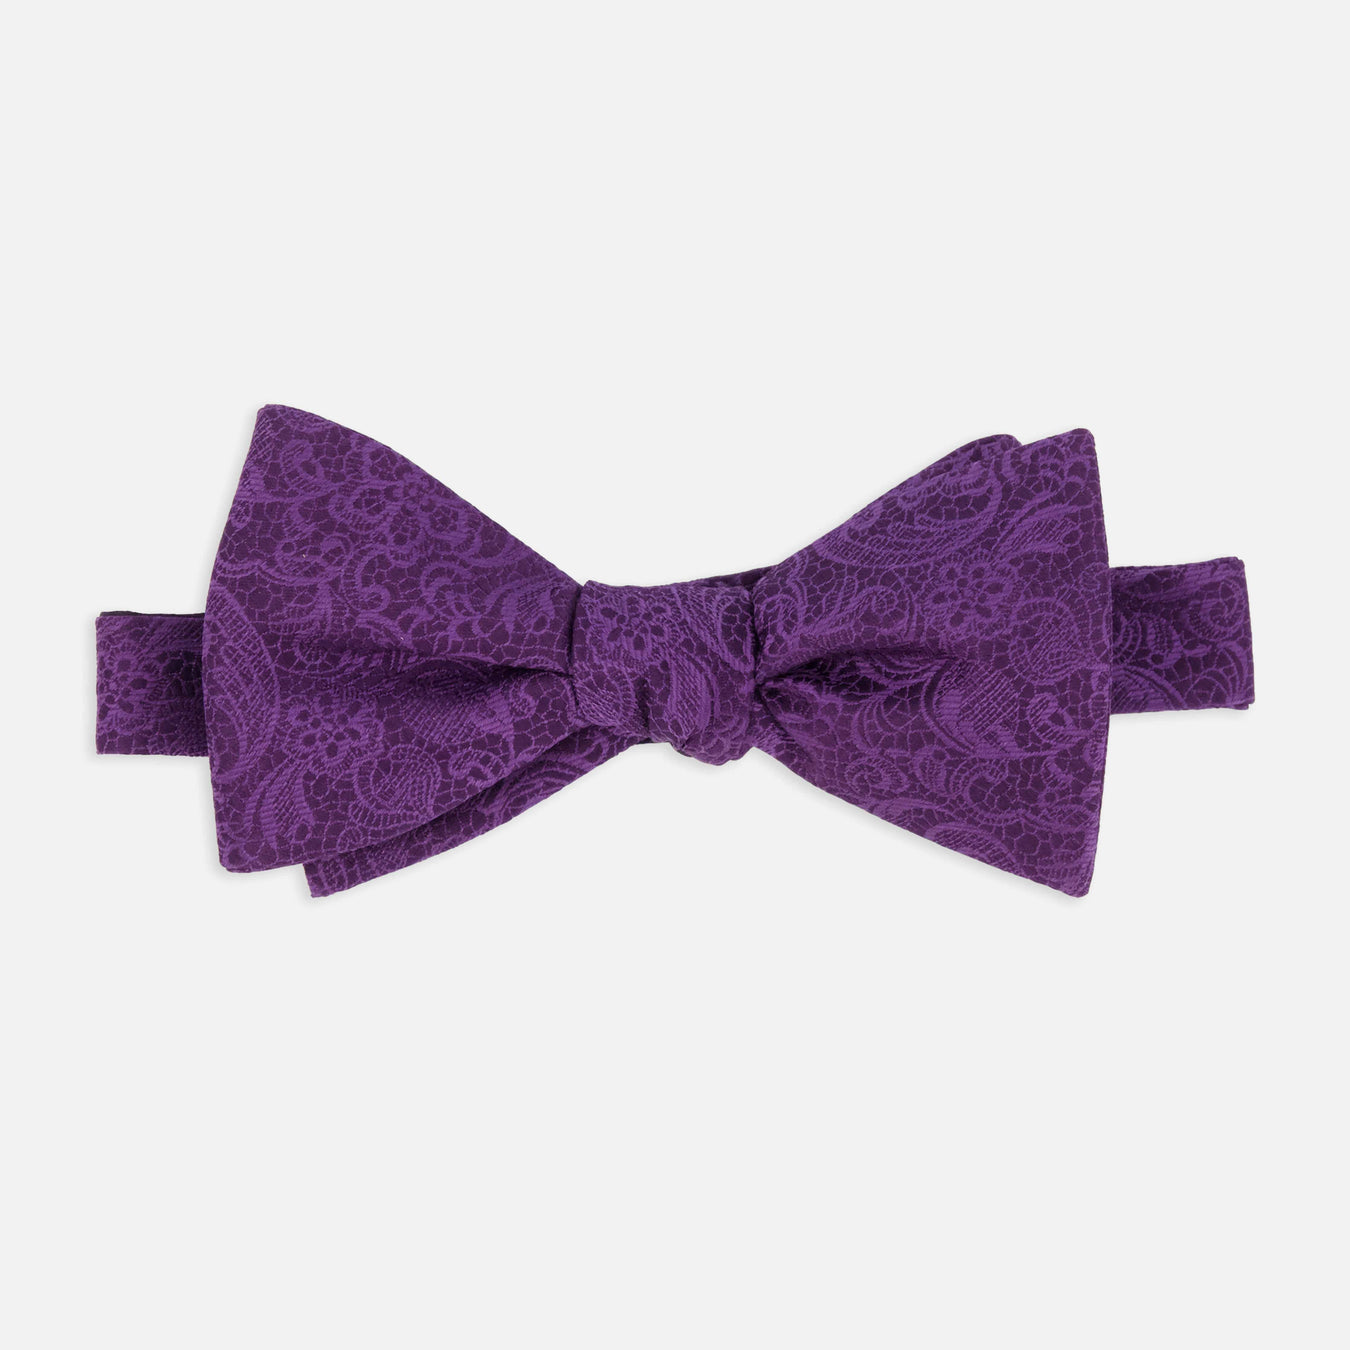 Ceremony Paisley Eggplant Bow Tie | Silk Bow Ties | Tie Bar